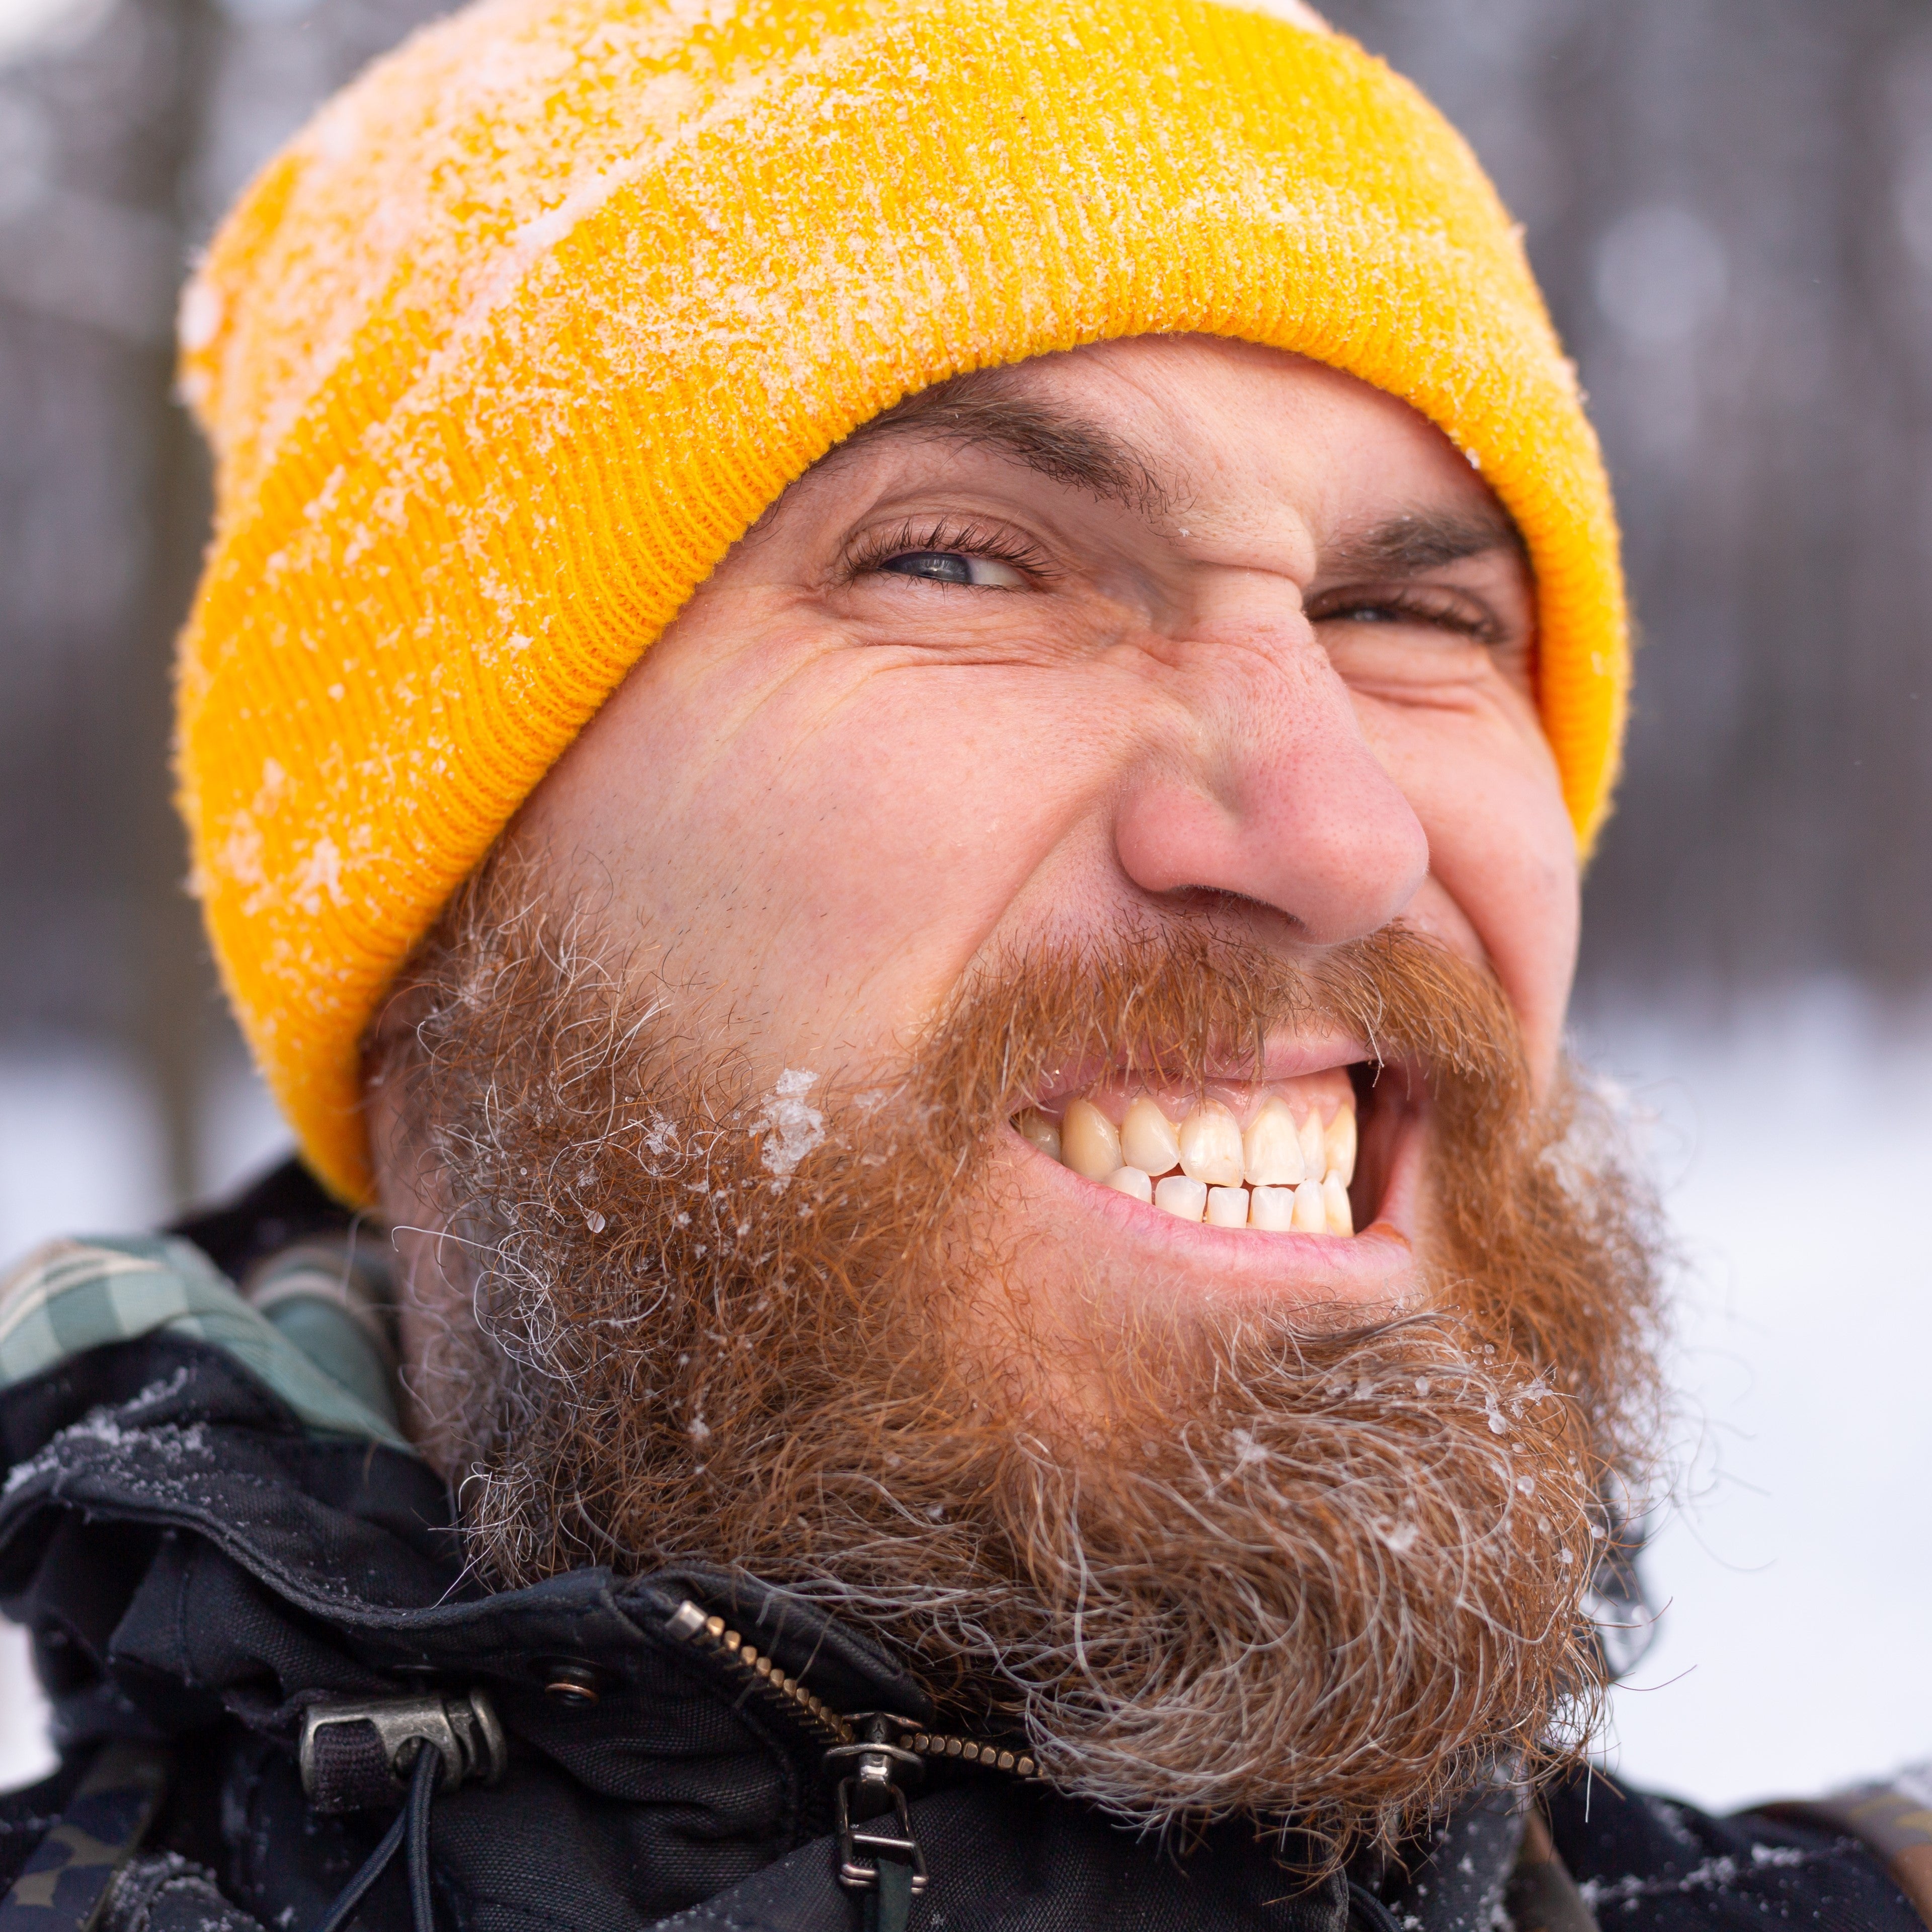 Beard Care During Winter Months